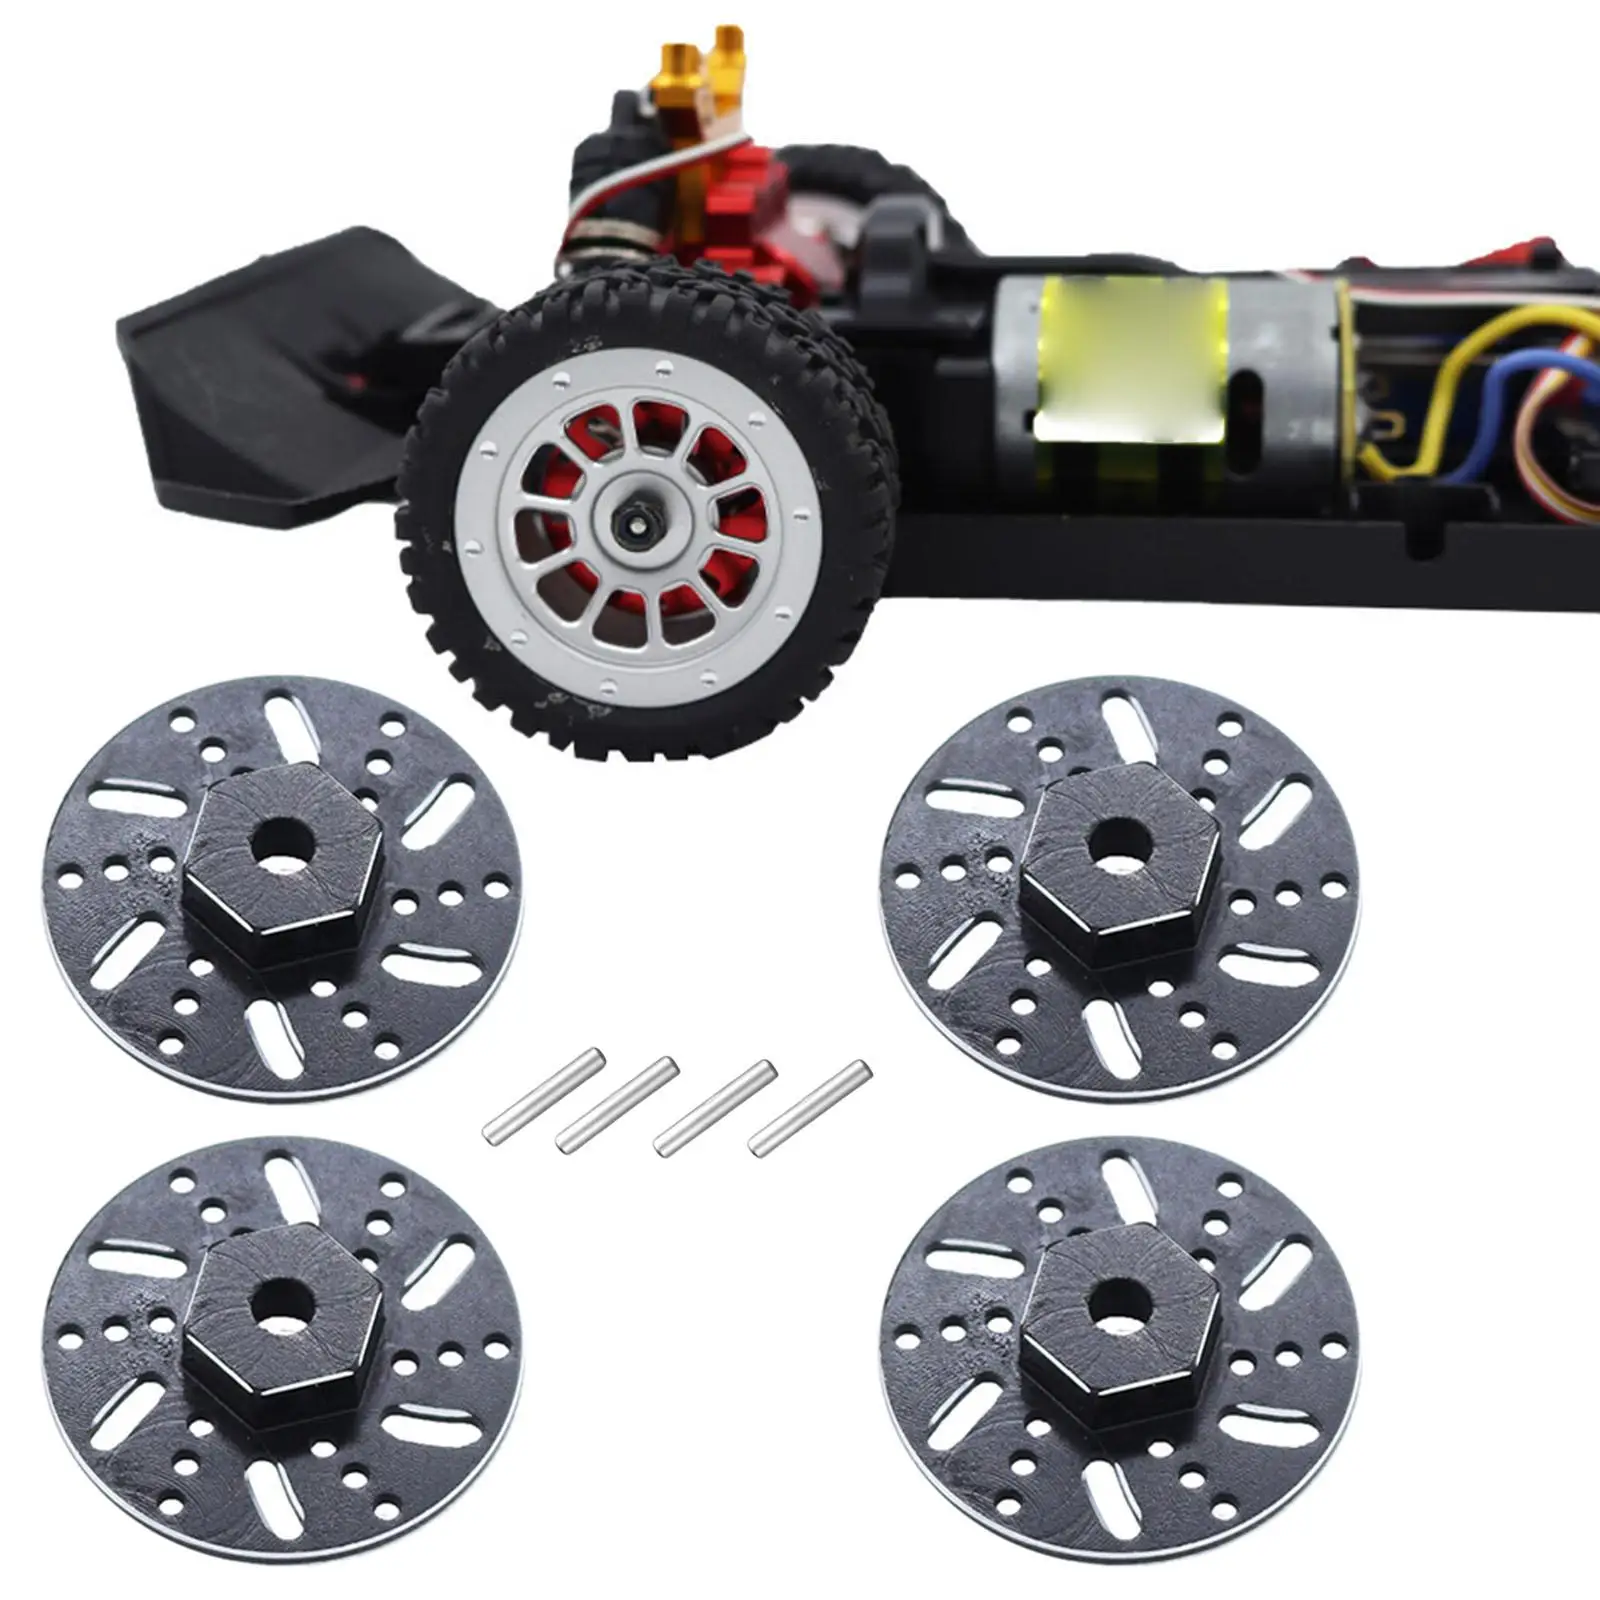 Aluminum Alloy RC Brake Disc for UD1602 1:16 Hobby Car Model Buggy Crawler DIY Accs